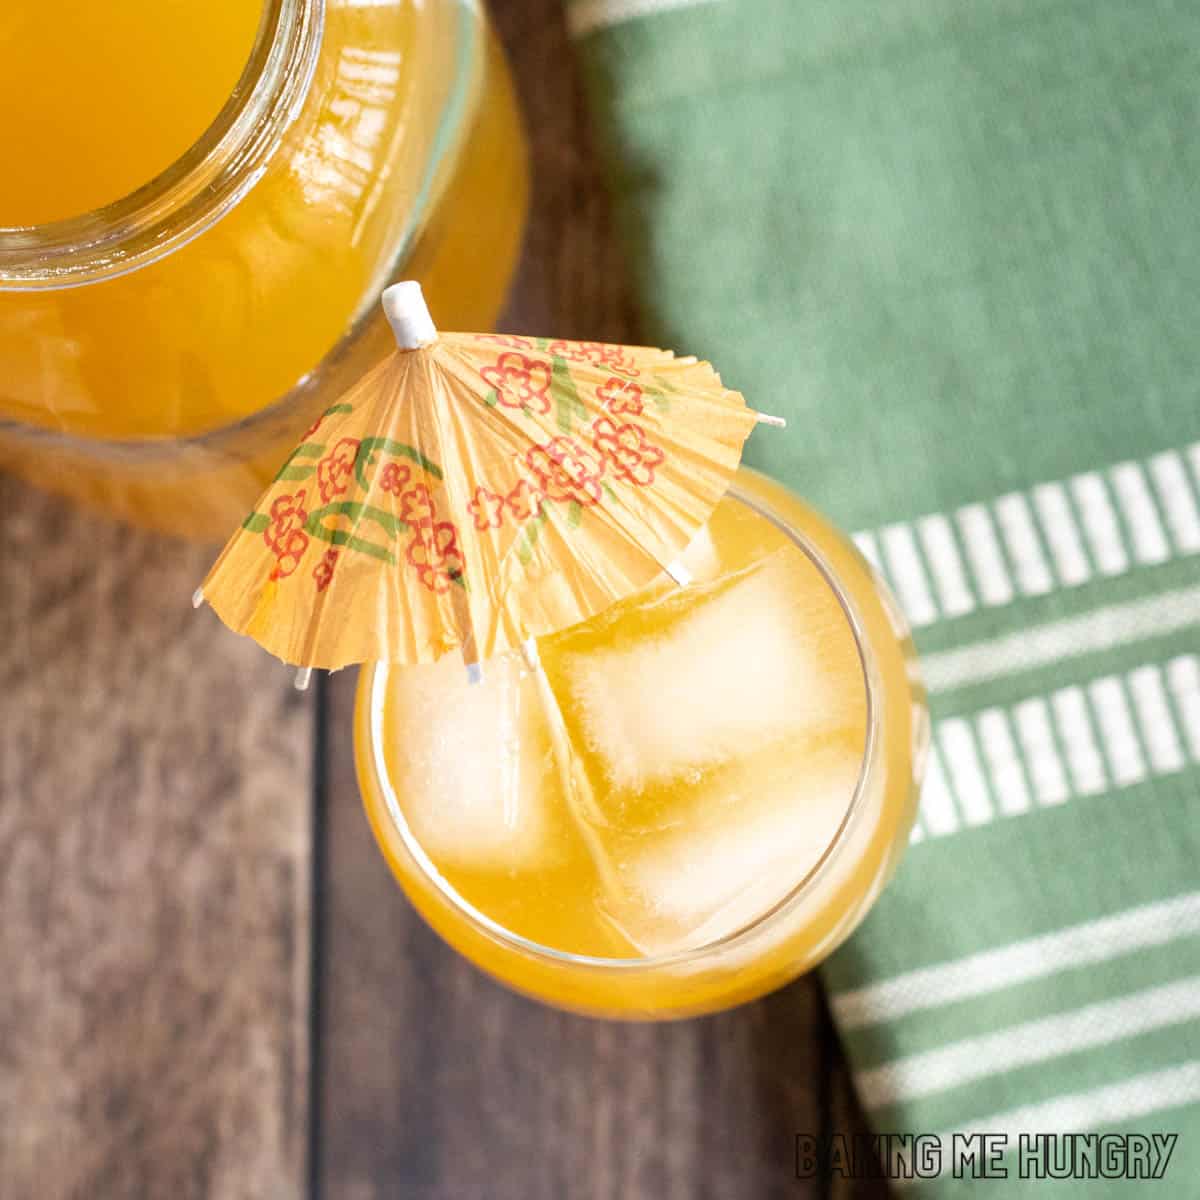 peach green tea lemonade recipe in a stemmed glass with an umbrella next to jar of tea